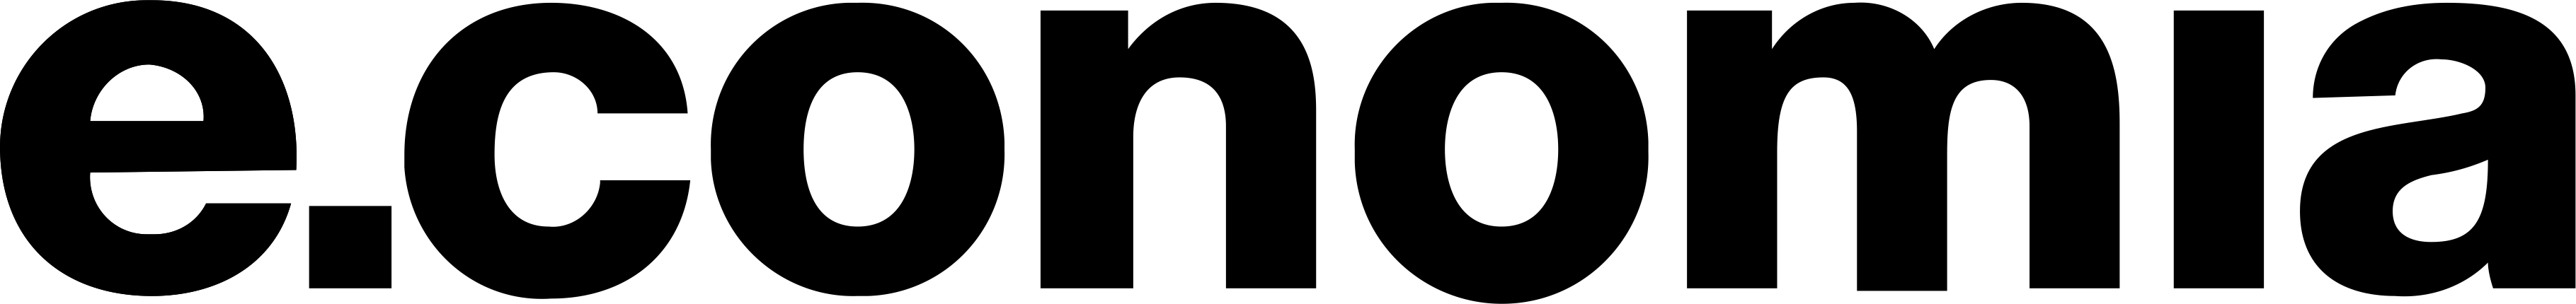 Logo společnosti Economia